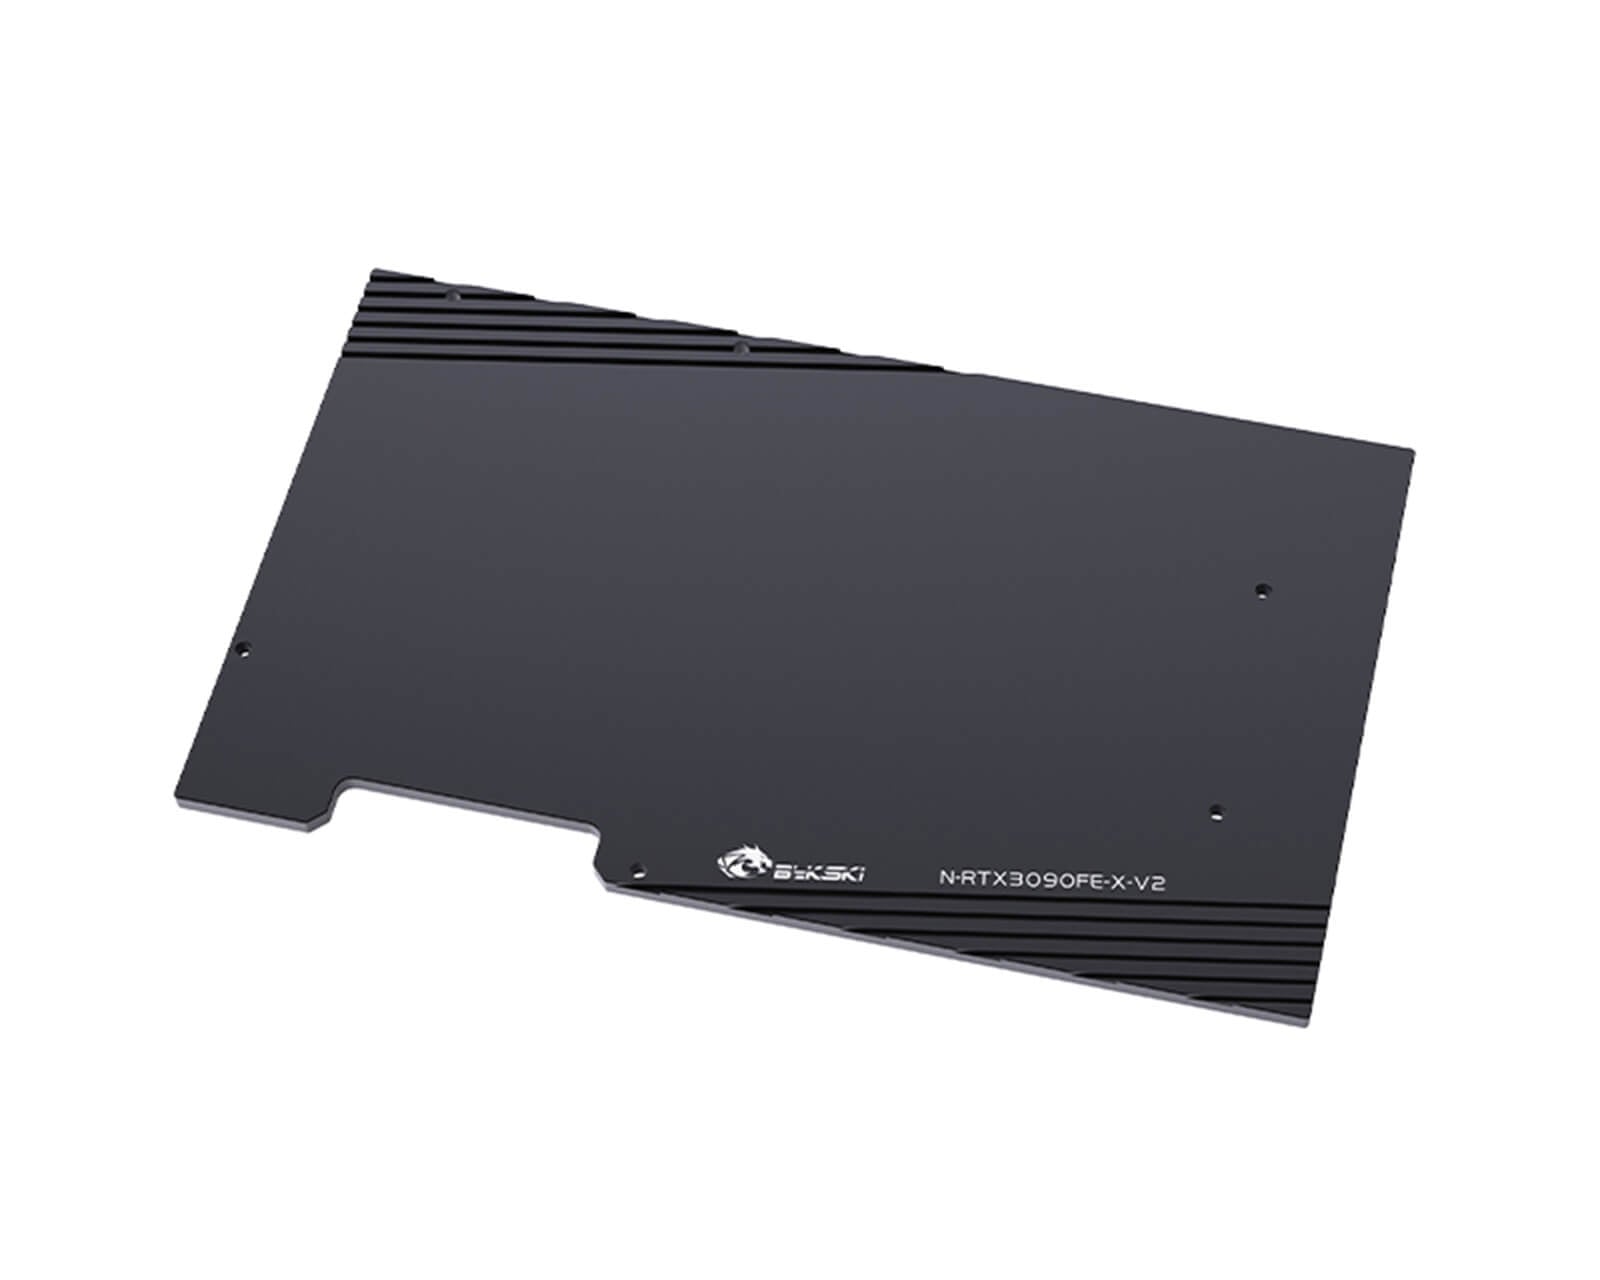 Bykski Full Coverage GPU Water Block and Backplate for nVidia Founders Edition RTX 3090 (N-RTX3090FE-X-V2) - Black